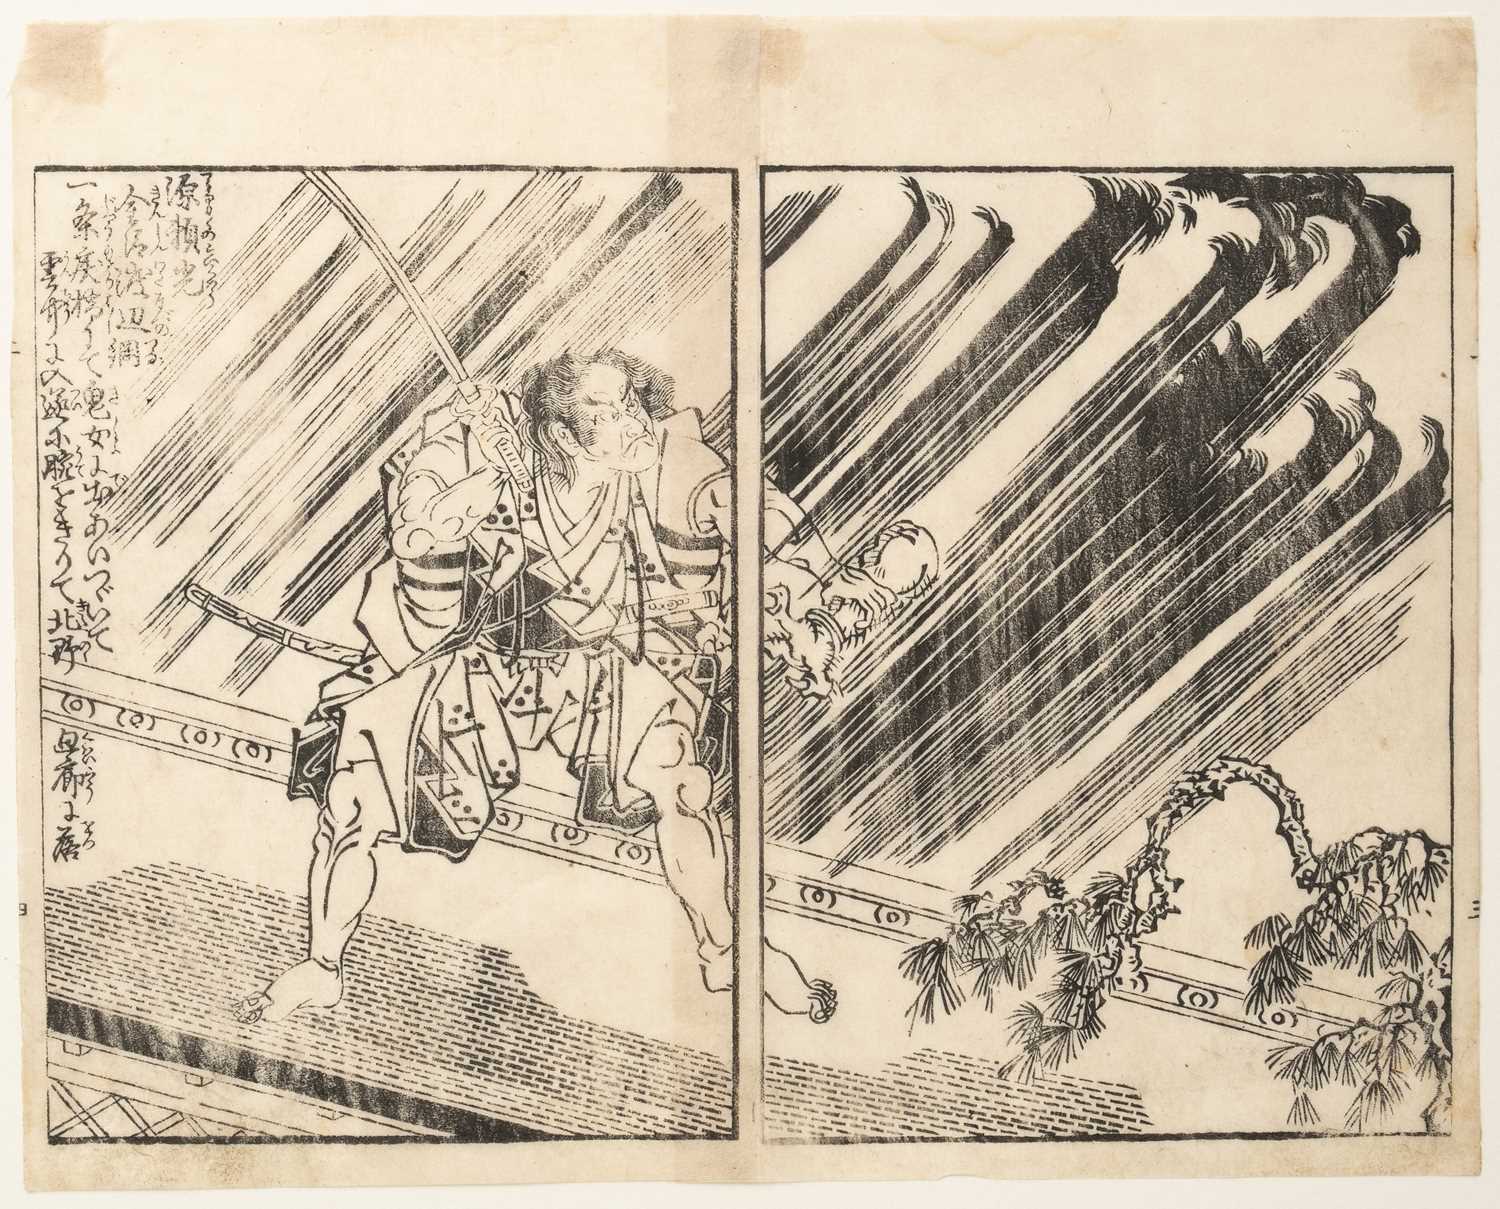 NO RESERVE KITAO SHIGEMASA (1738-1820) NISHIKAWA SUKENOBU (1671-1751) AND OTHERS EDO PERIOD, 18TH/